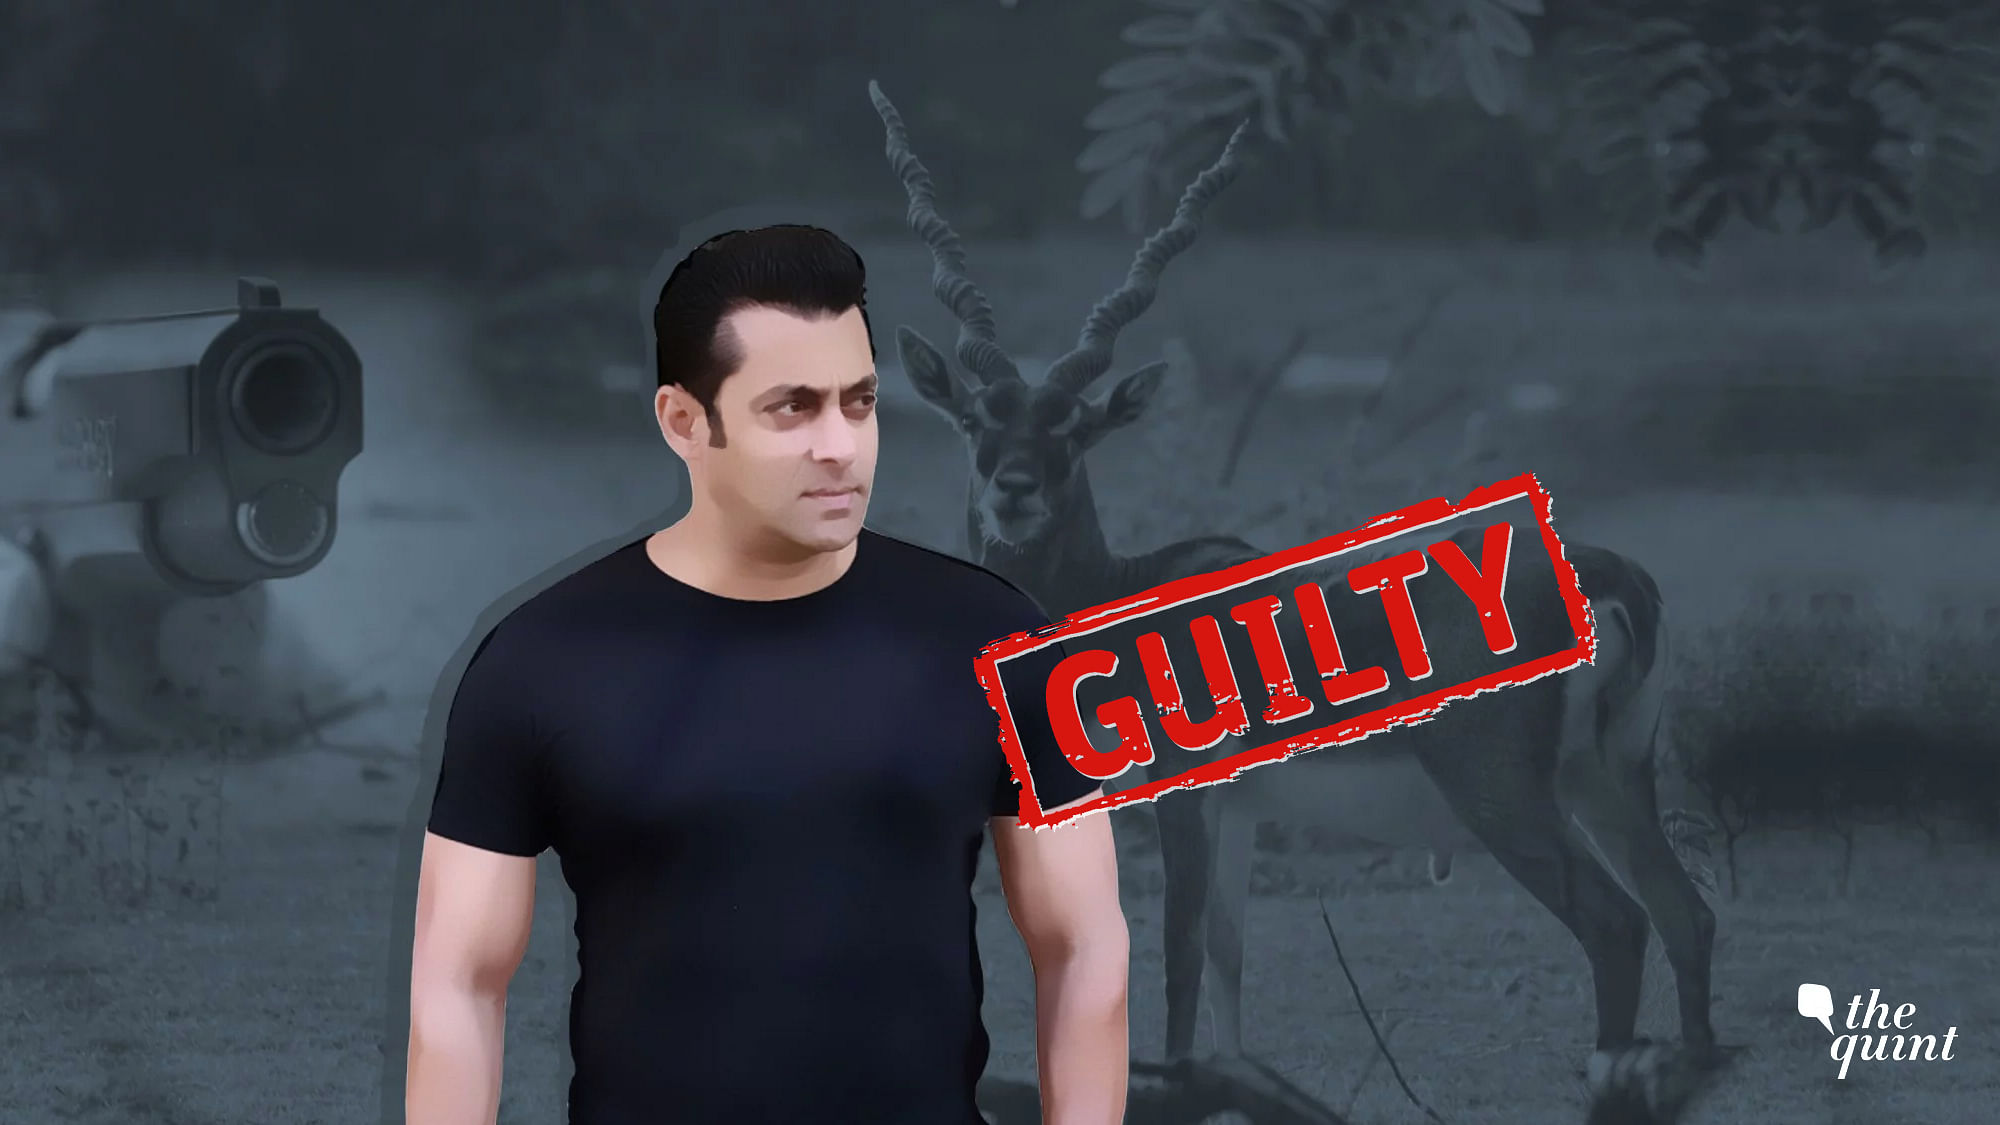 Salman Khan has been convicted in the 1998 blackbuck poaching case.